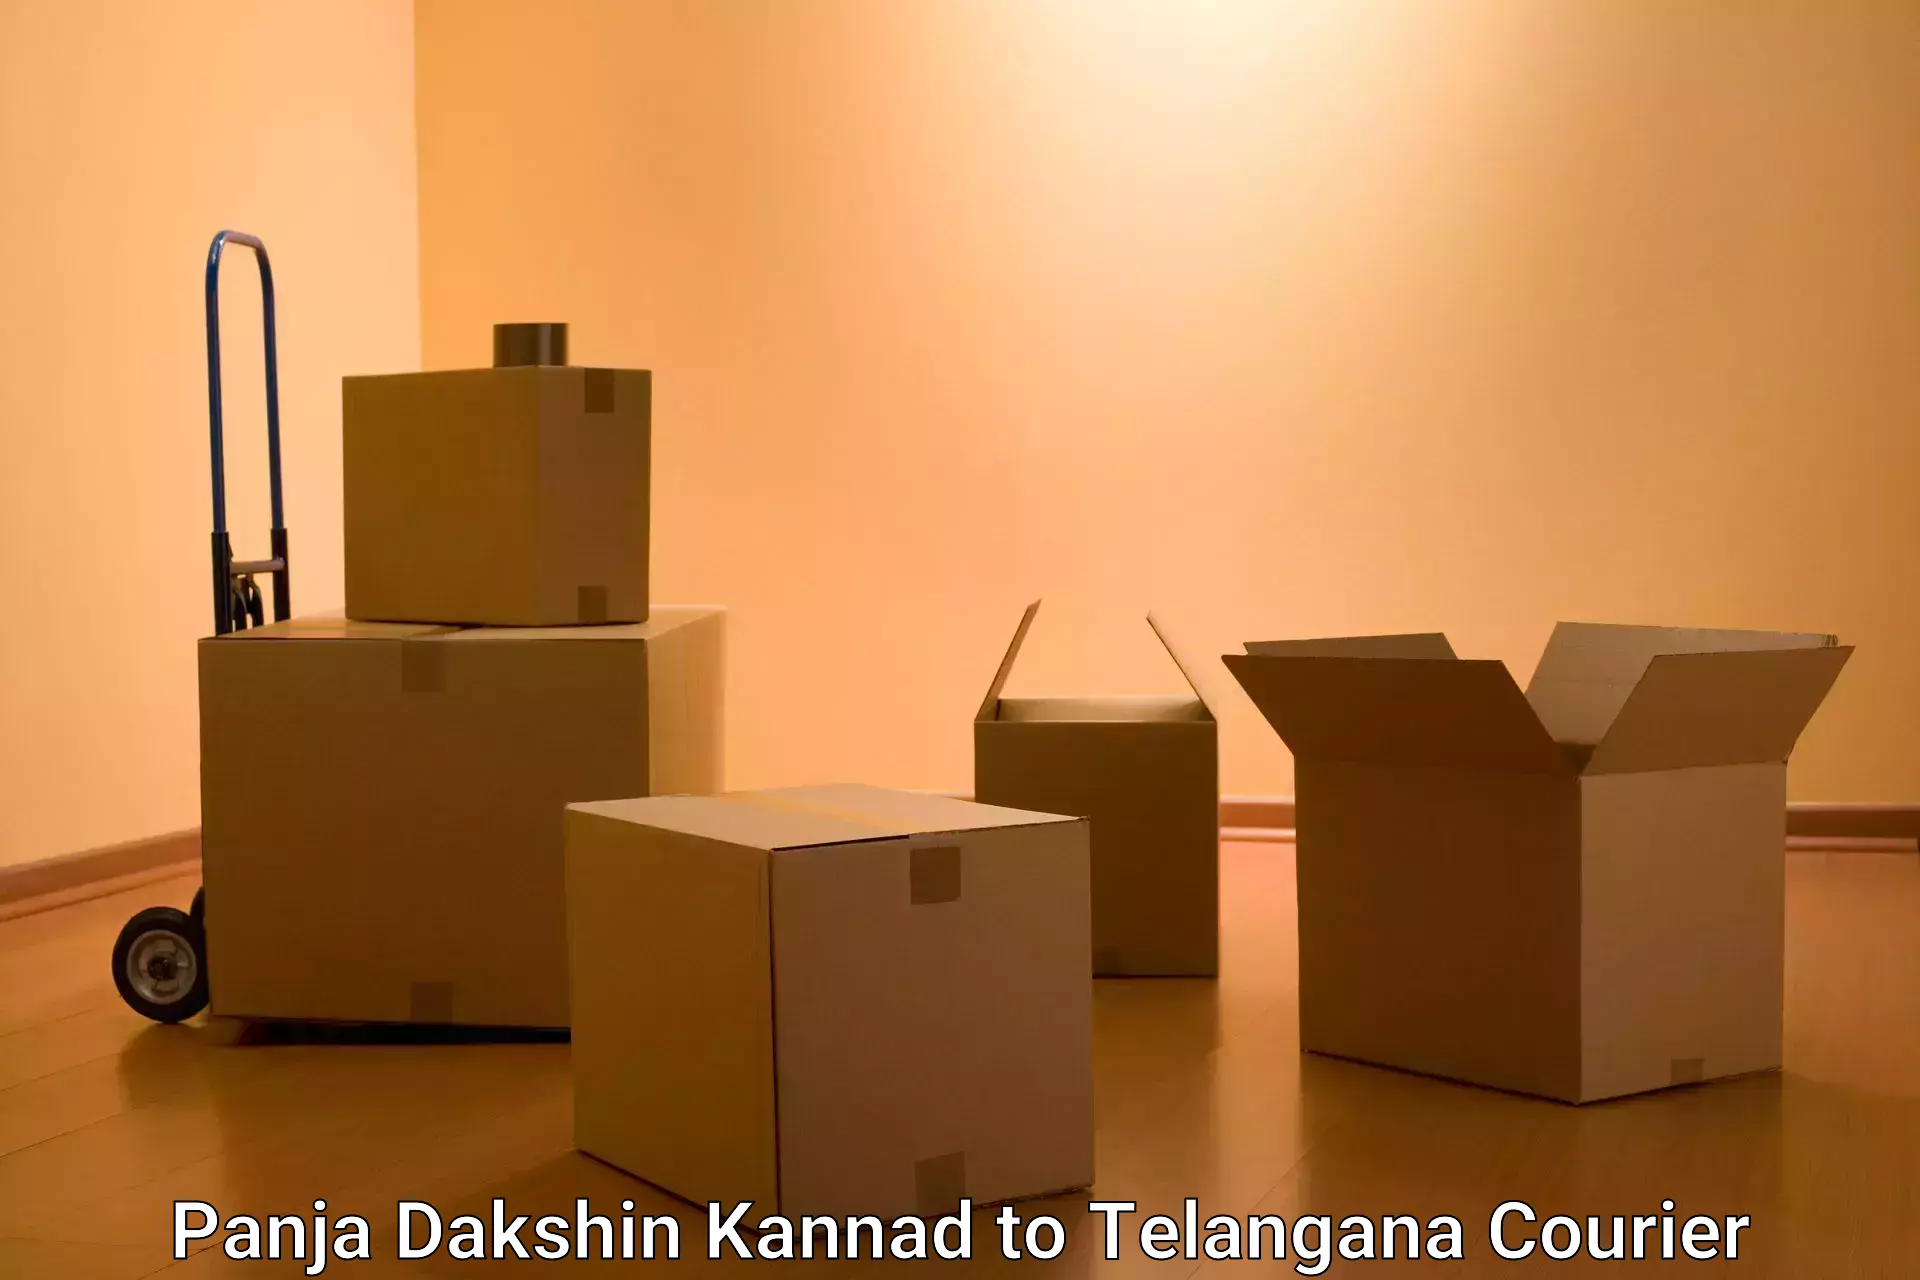 Package delivery network Panja Dakshin Kannad to Mudigonda